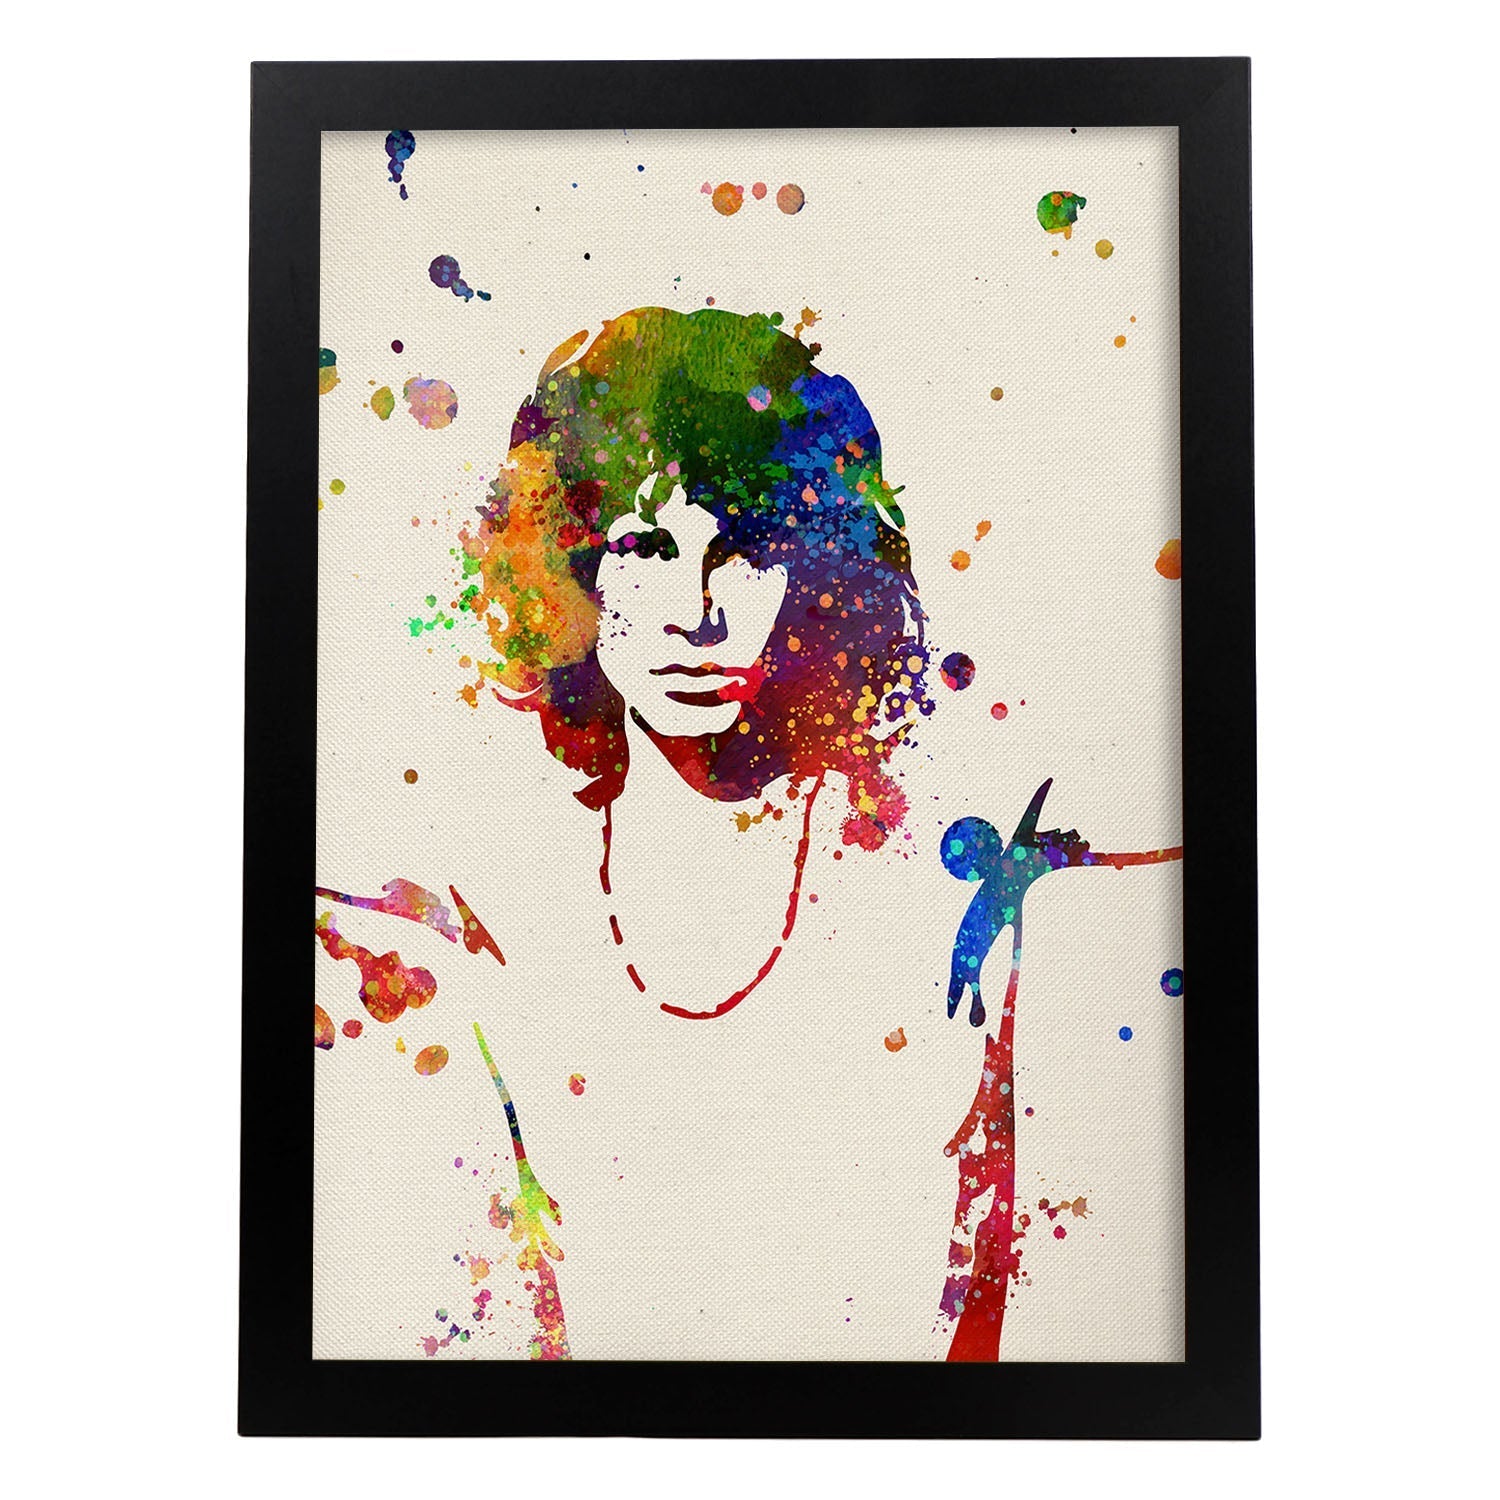 Poster imagen de Jim Morrison. Posters con diseño acuarela de famosos, actores, músicos-Artwork-Nacnic-A3-Marco Negro-Nacnic Estudio SL